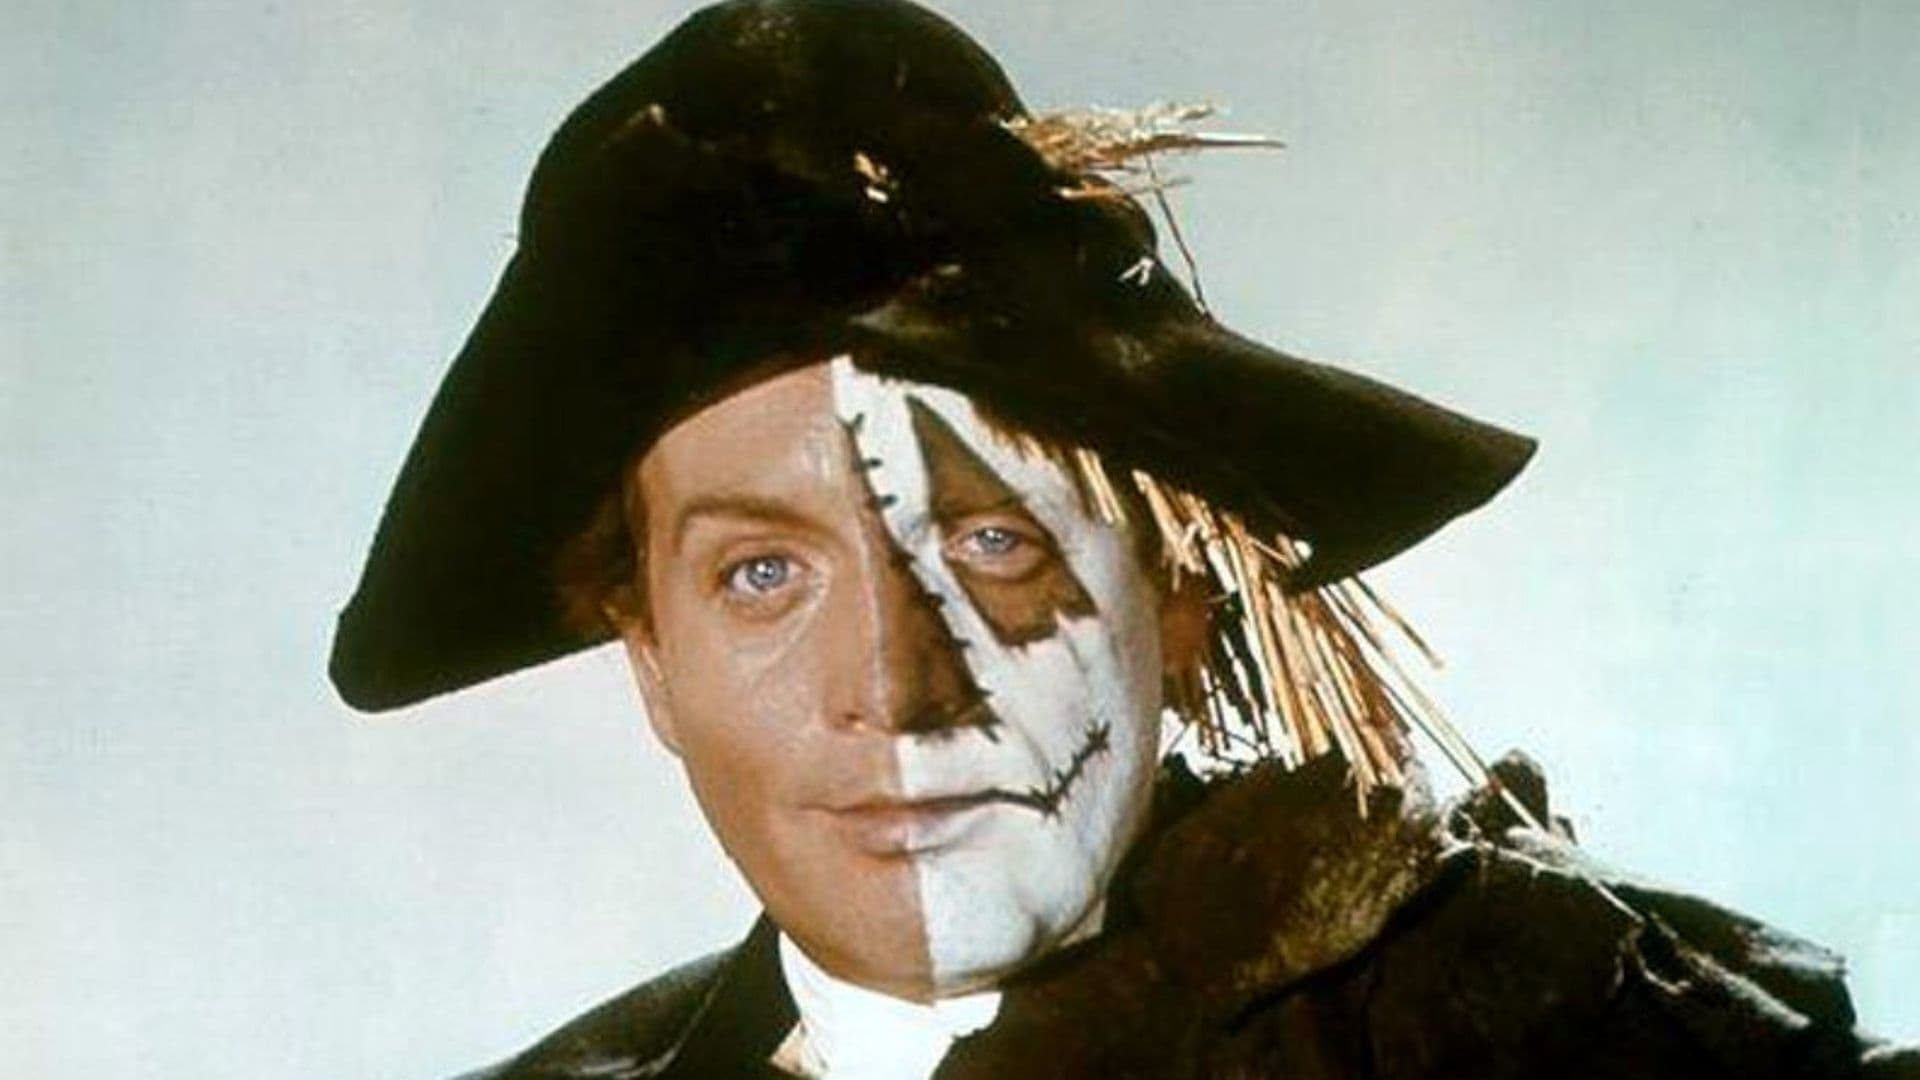 Dr. Syn, Alias the Scarecrow (1963)